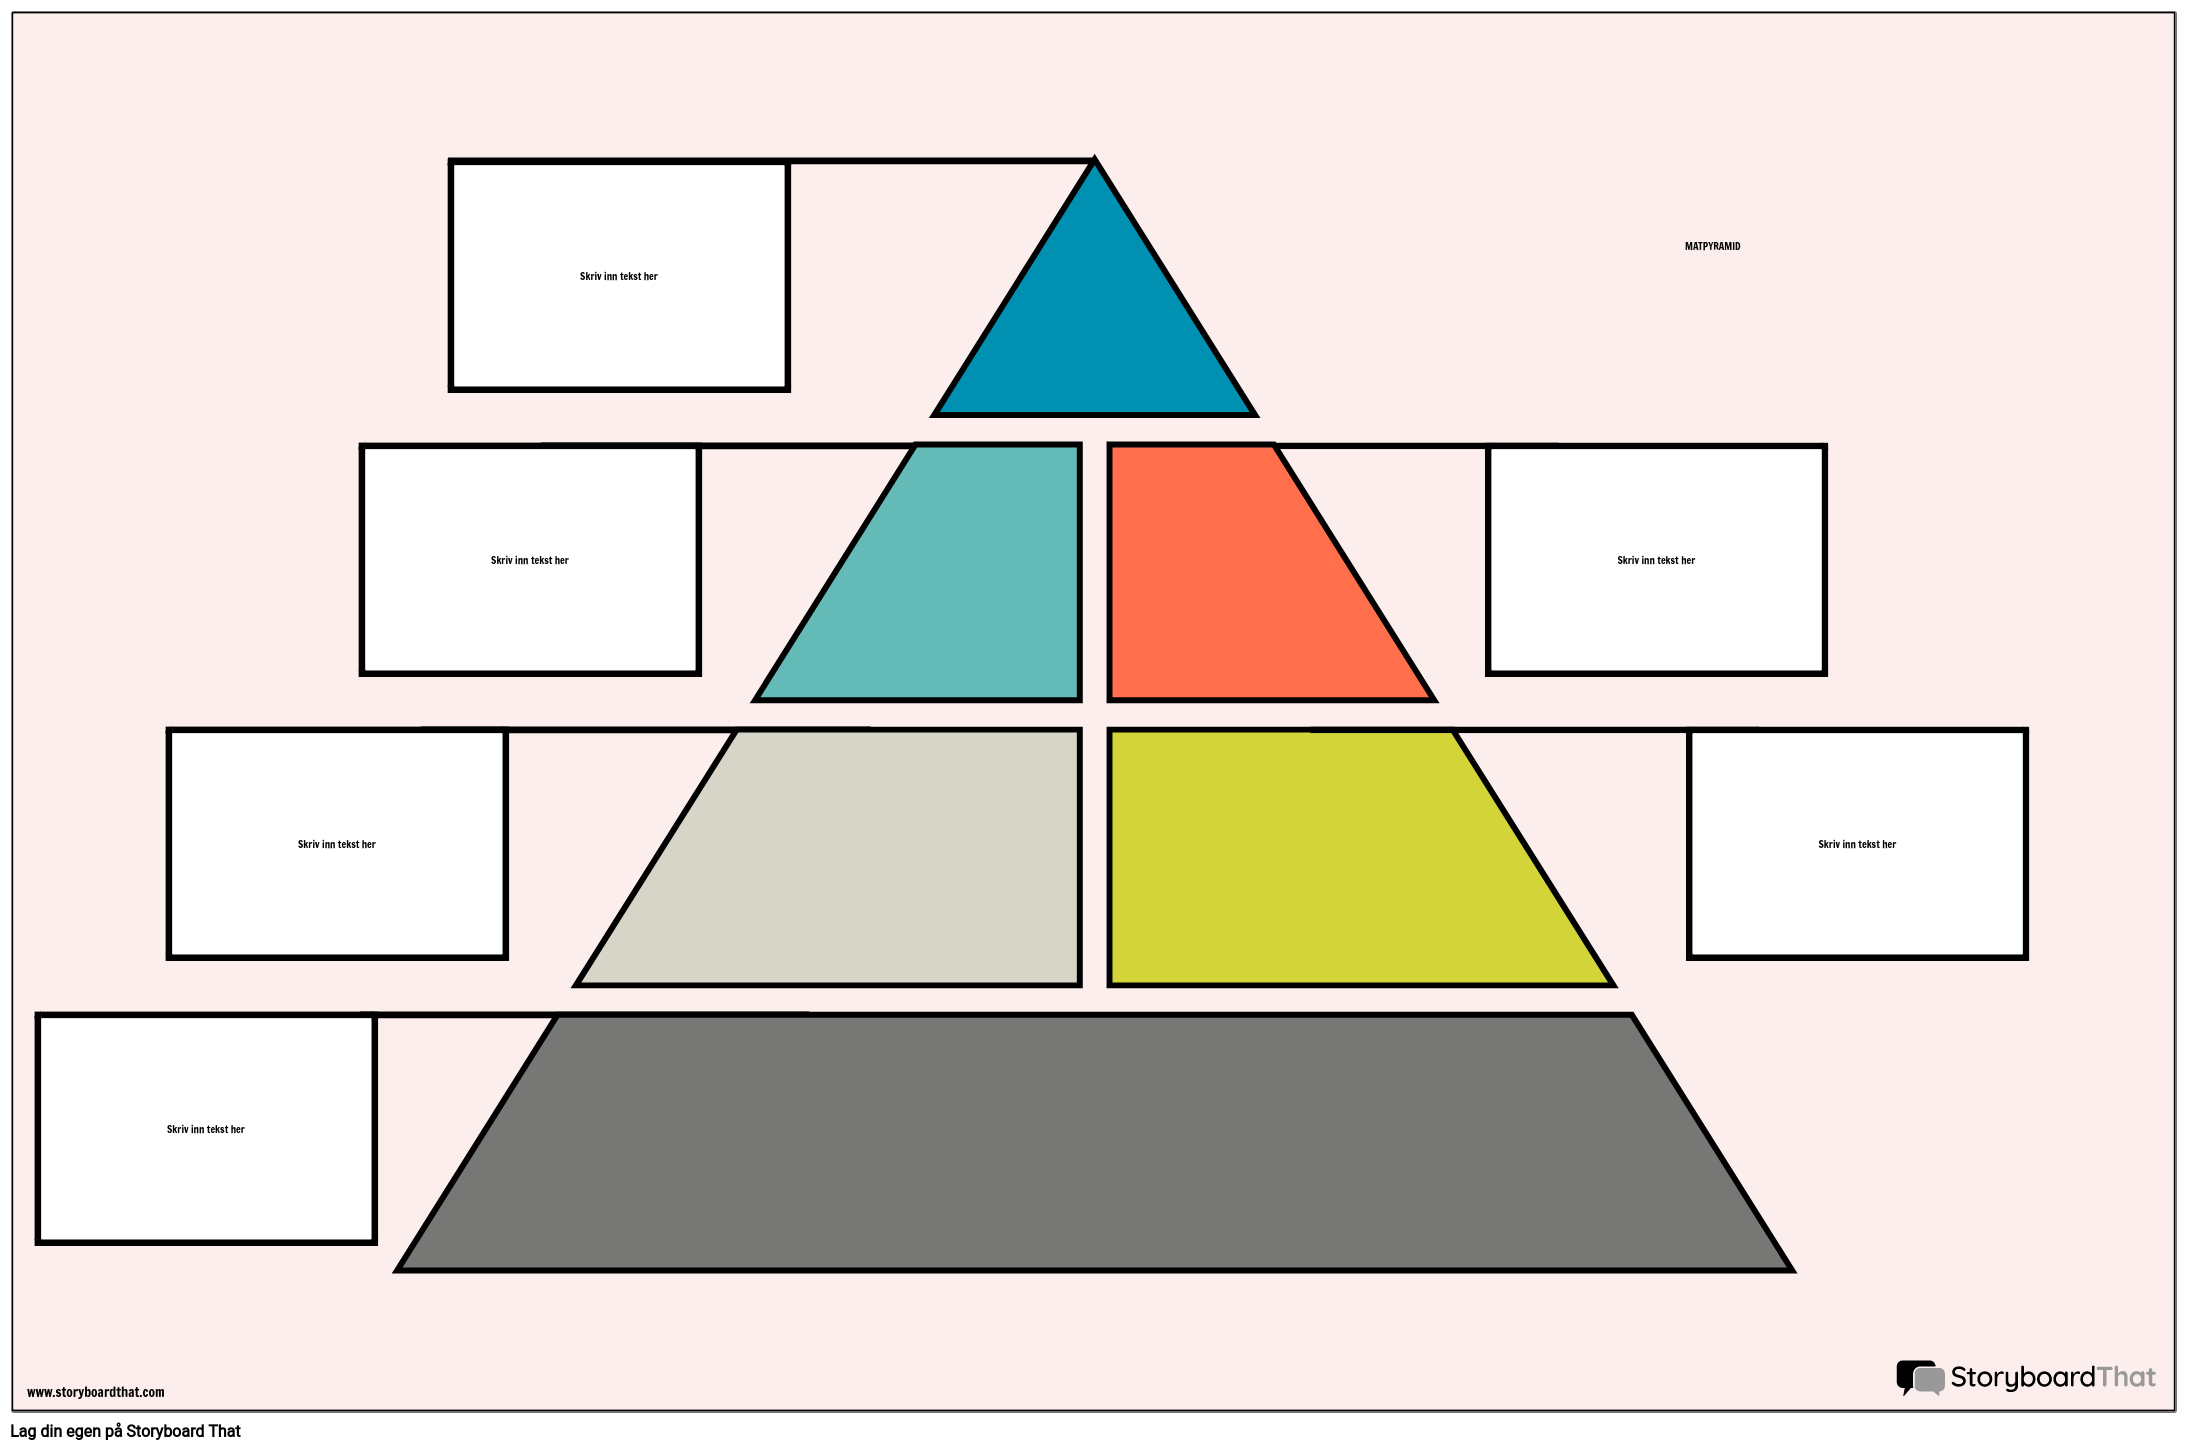 Matpyramide Plakat